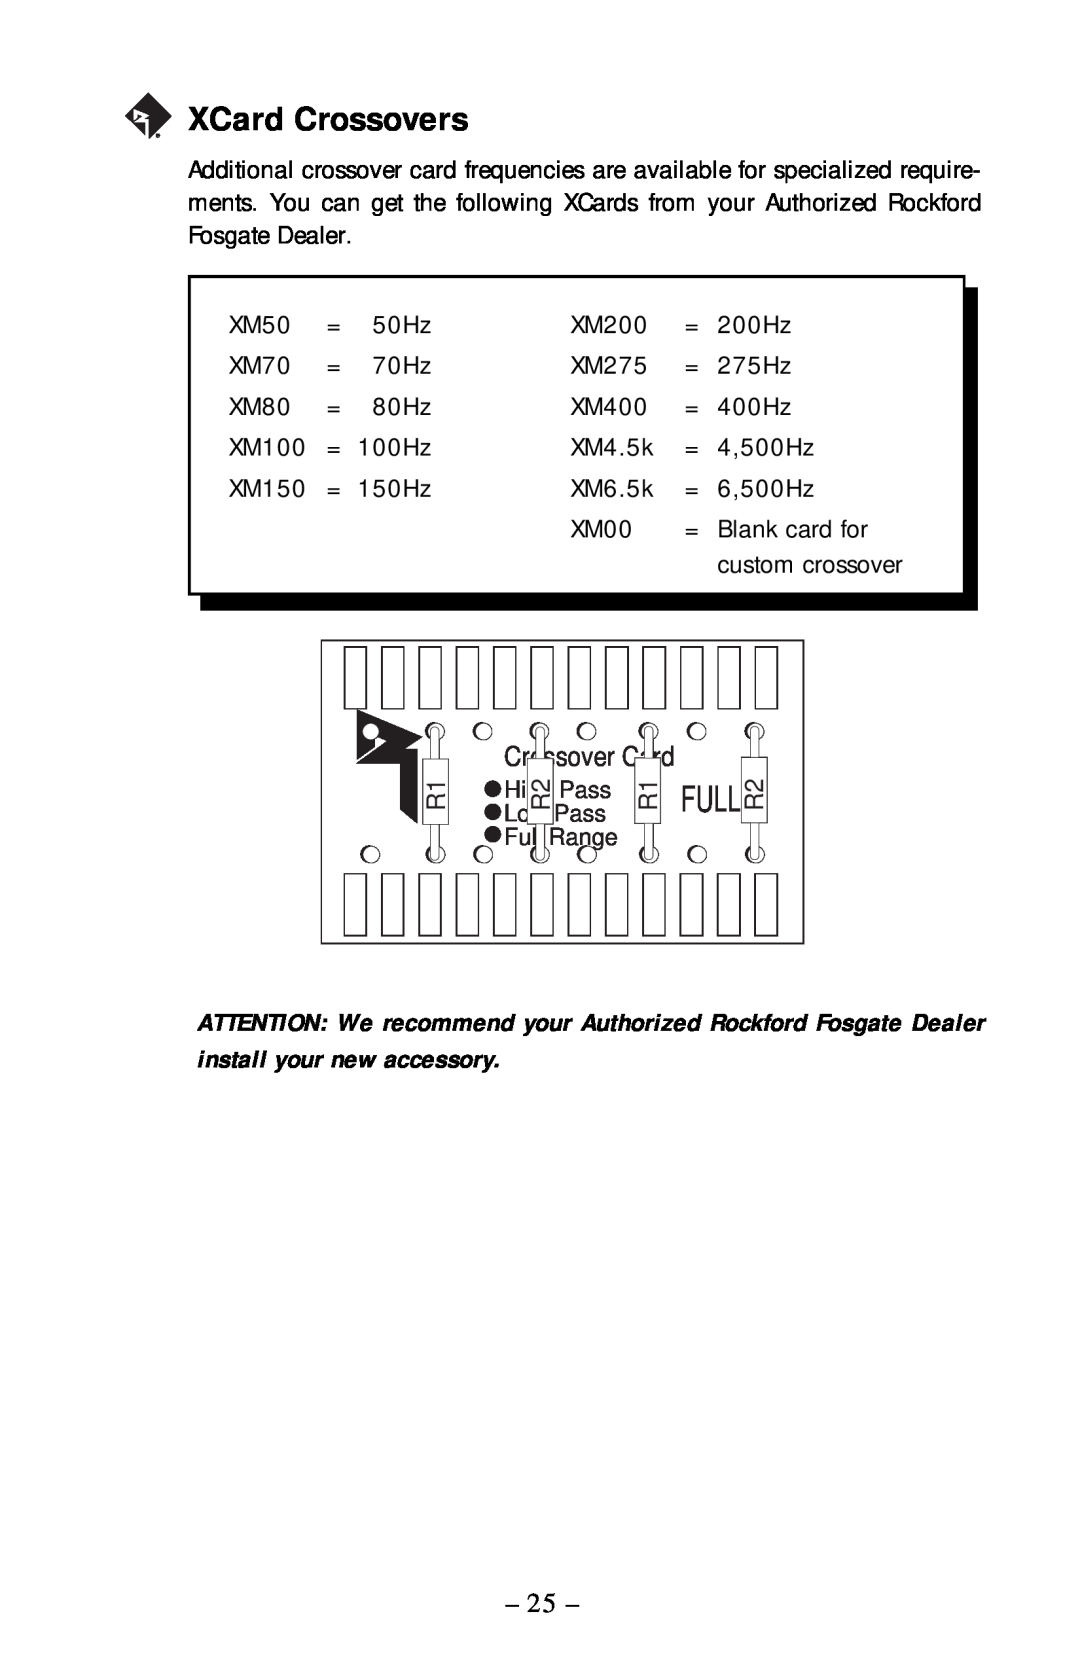 Rockford Fosgate 75.2, 55.2, 125.2, 225.2 manual XCard Crossovers, Crossover Card, Full 